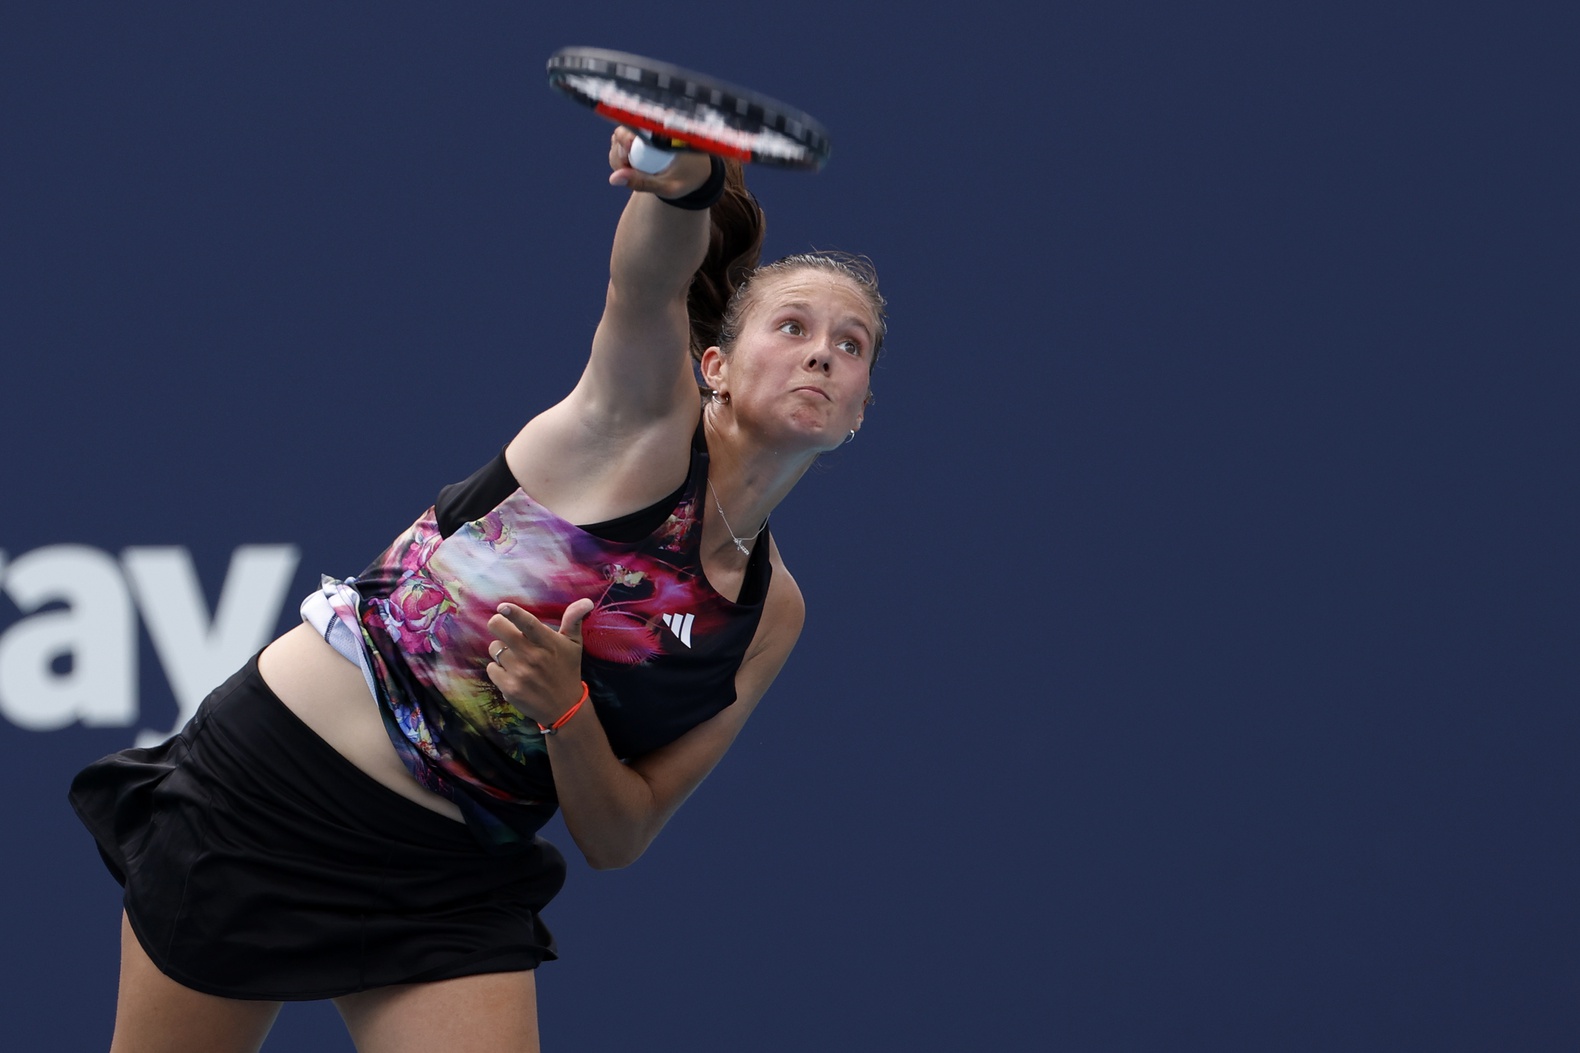 Daria Kasatkina in action ahead of the WTA Madrid Open.